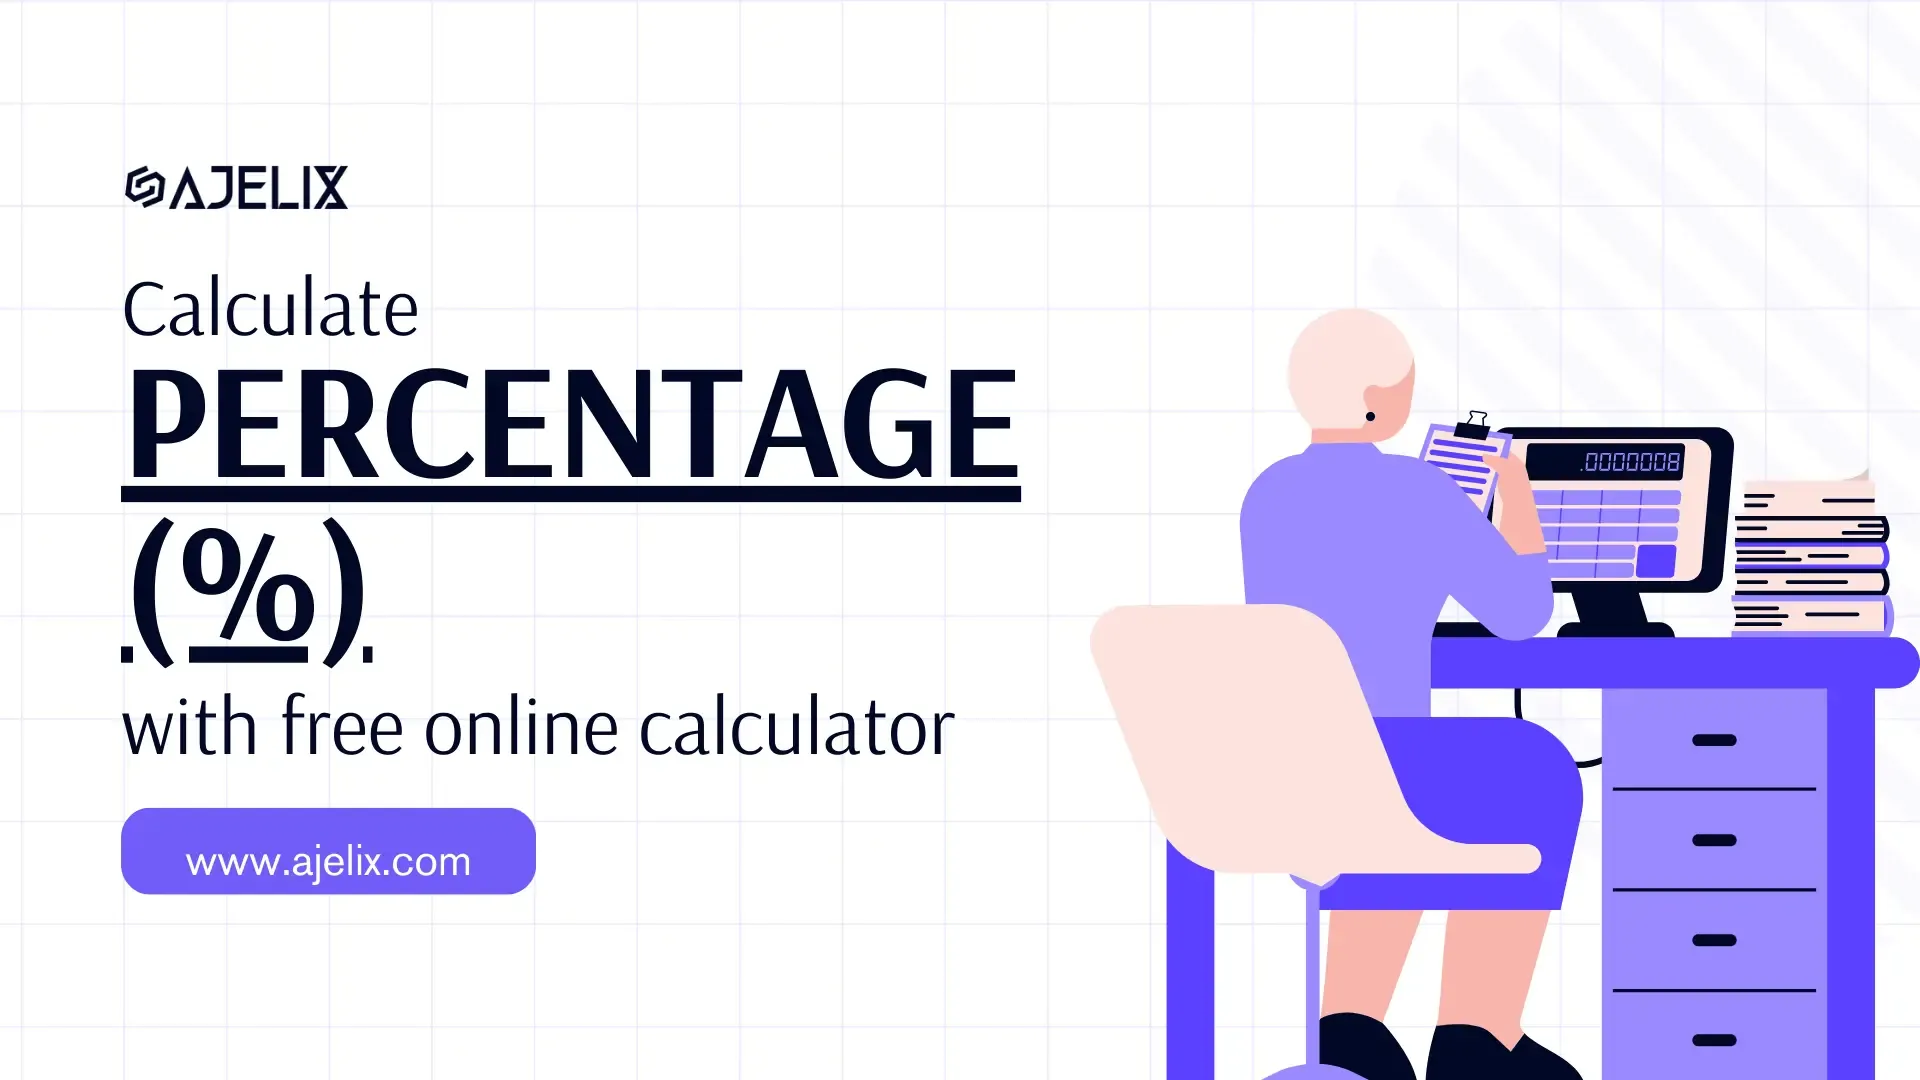 Free percentage calculator online, calculate percent banner